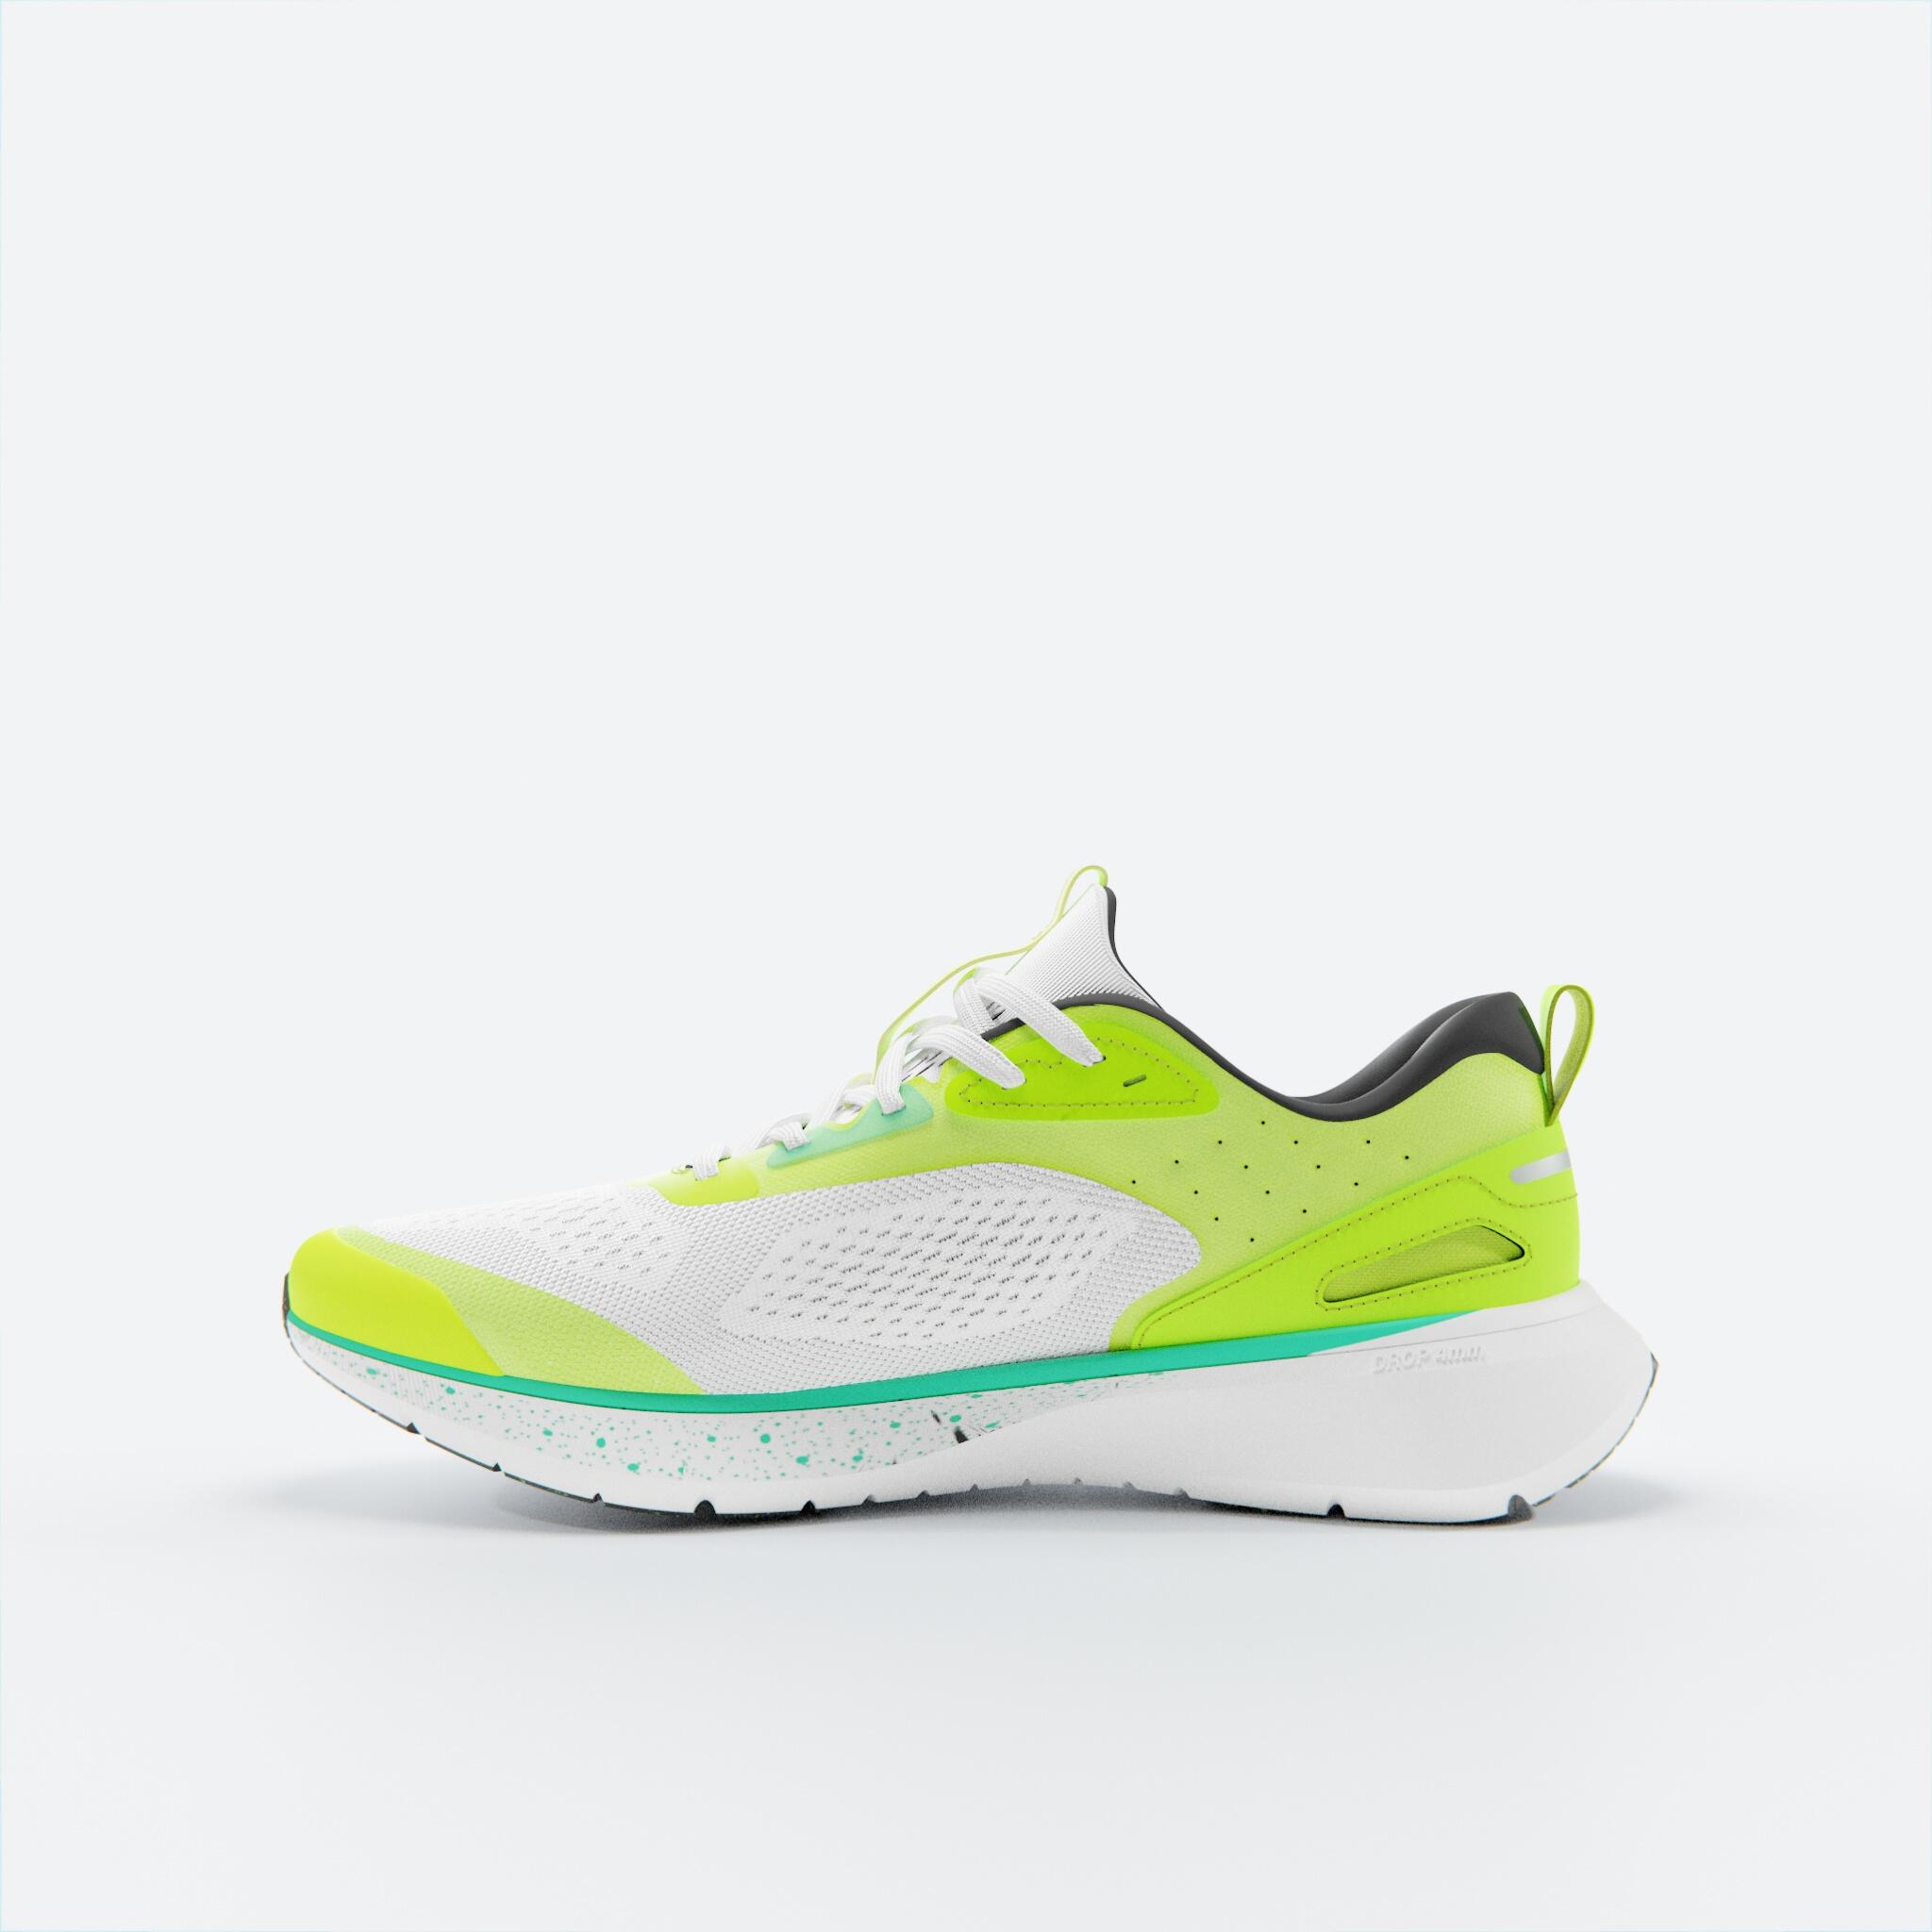 MEN'S JOGFLOW 190.1 Running Shoes - White/Yellow 2/7